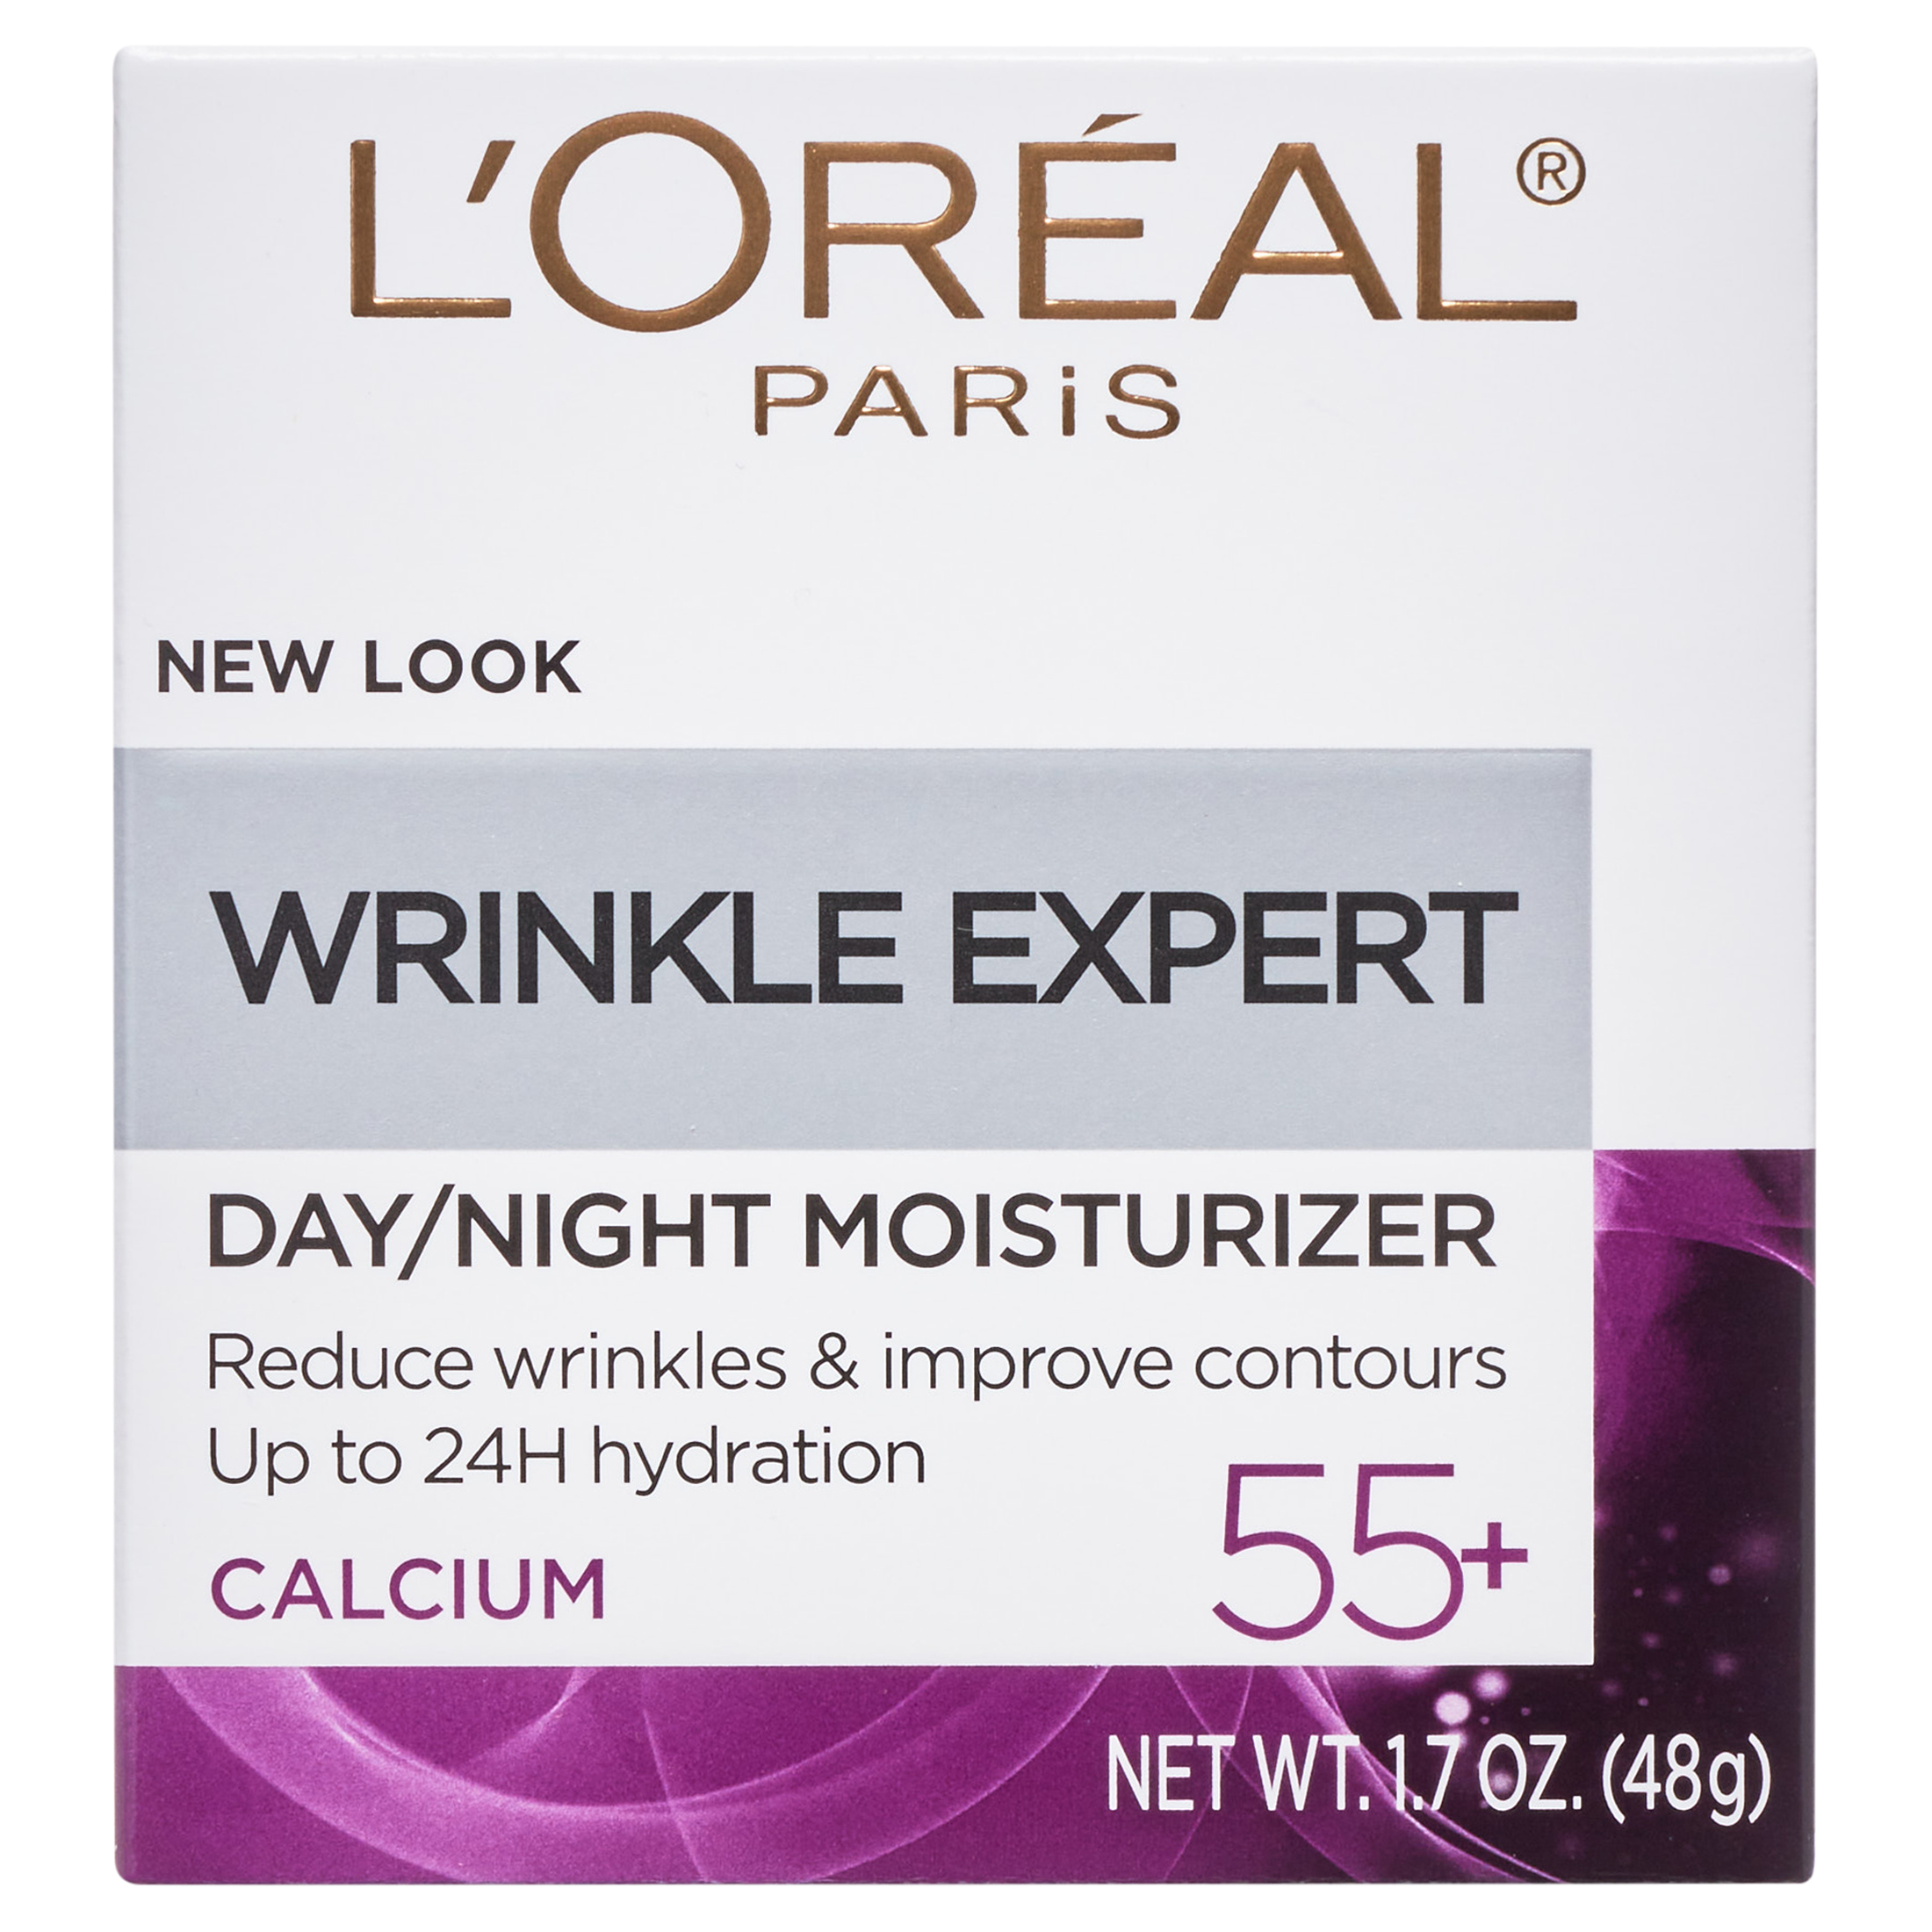 L'Oreal Paris Wrinkle Expert Face Moisturizer, 1.7 oz - image 2 of 8